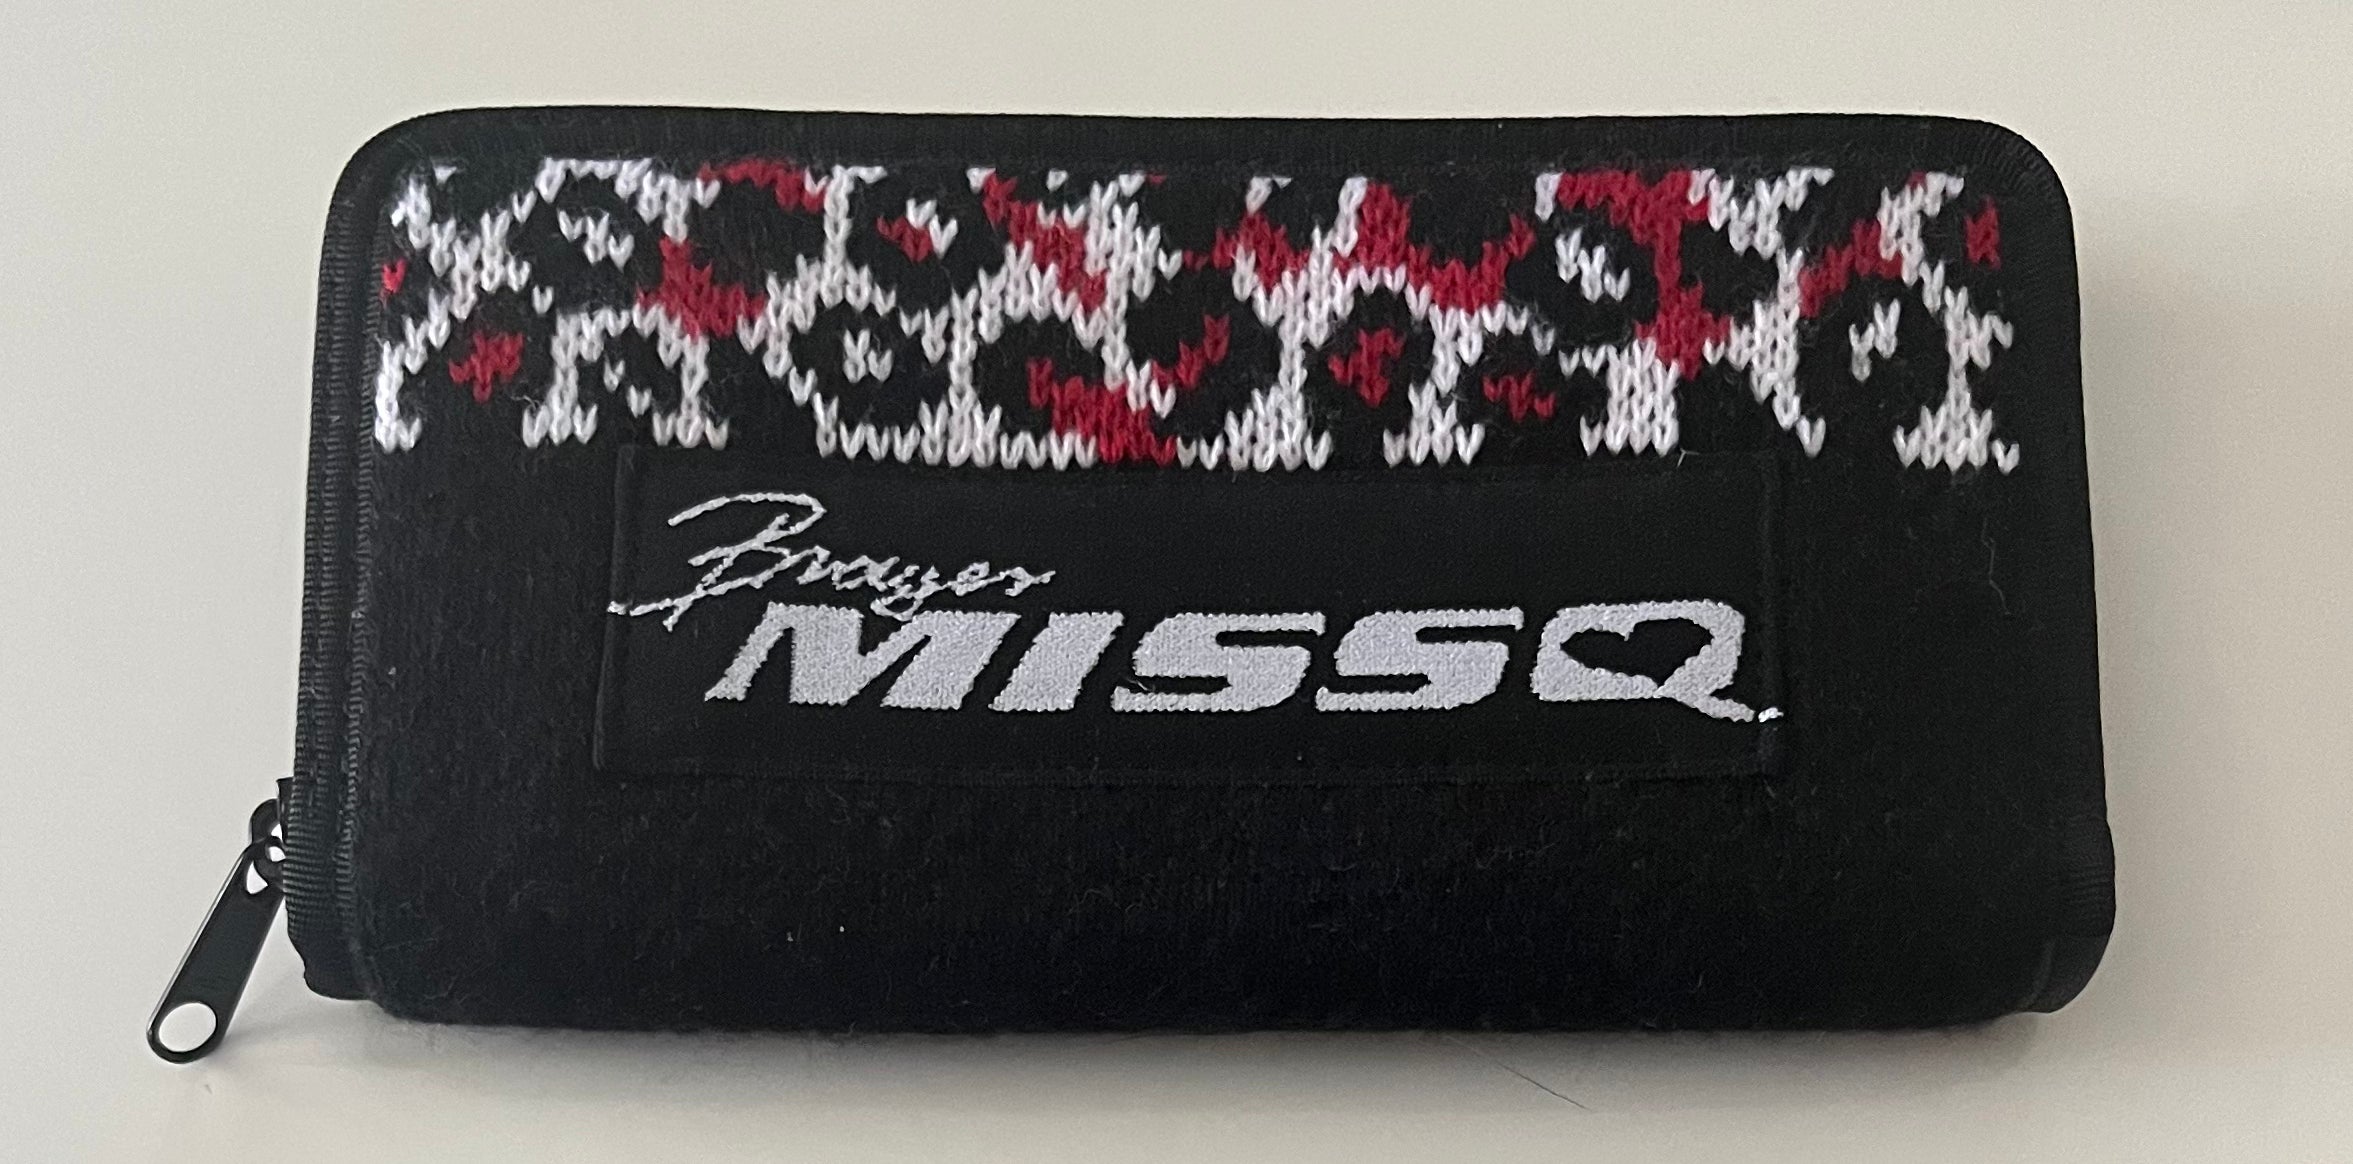 MissQ Multicolor Cotton Zip Wallet